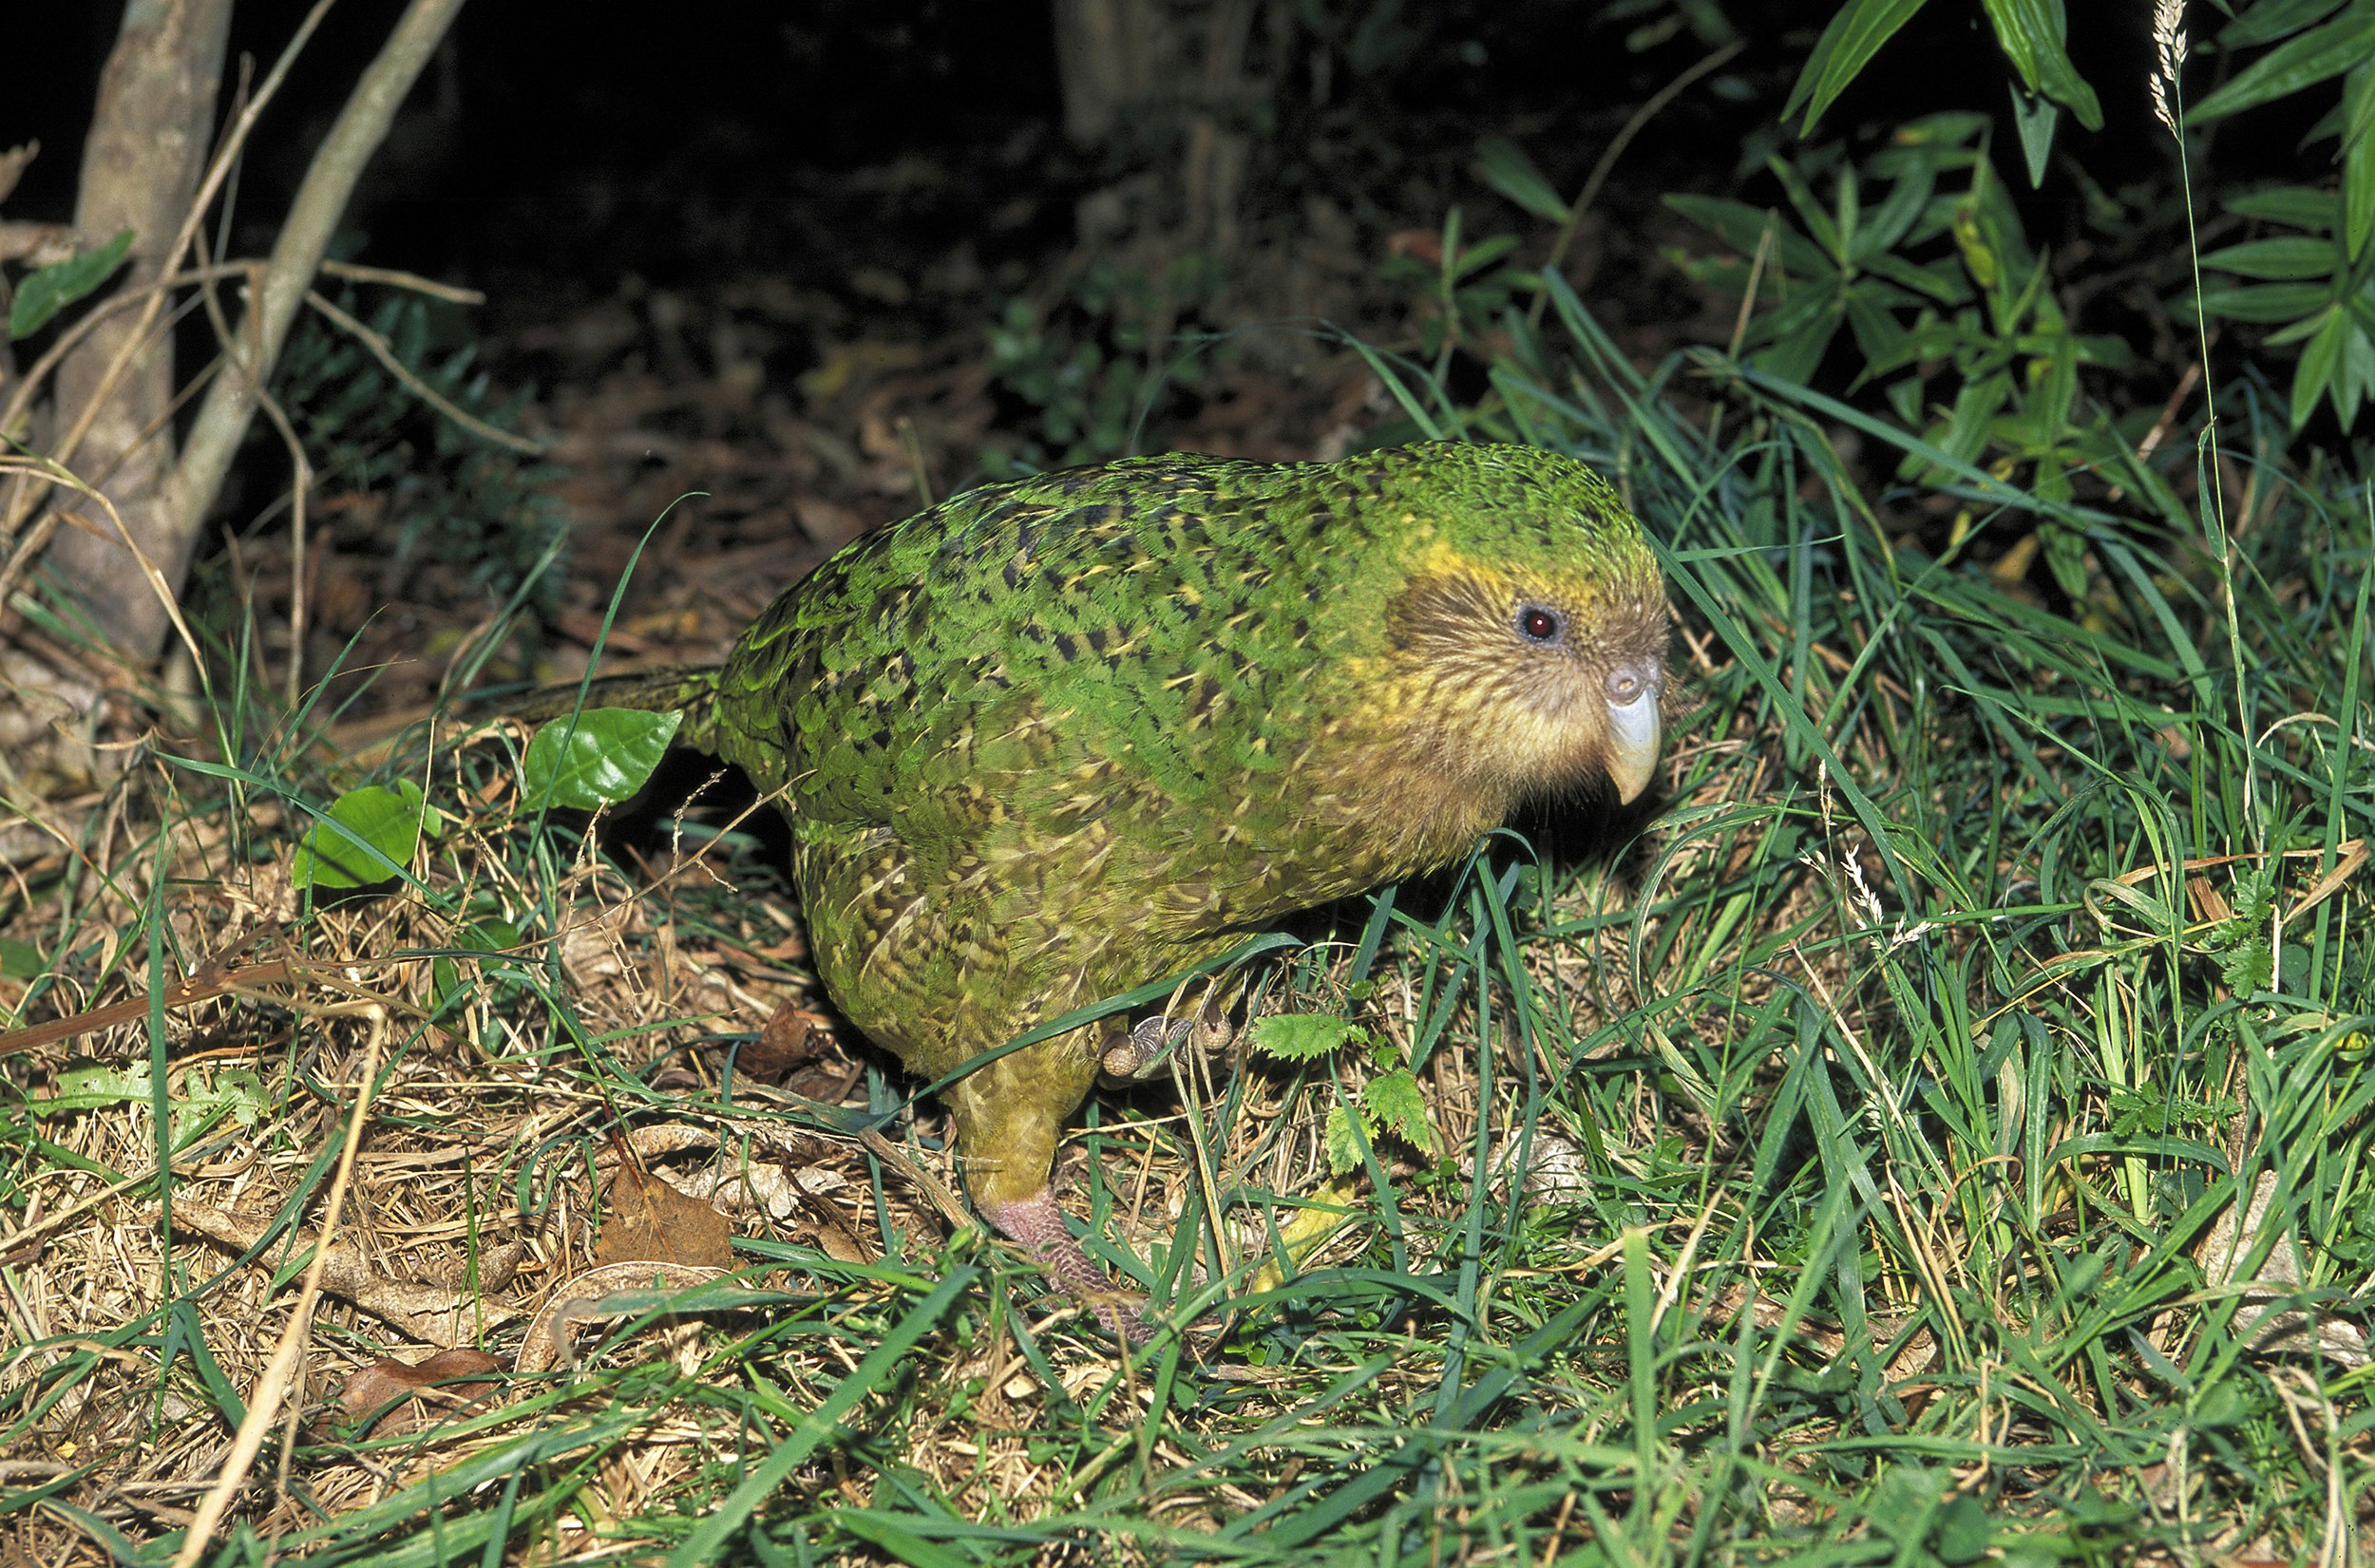 The kakapo bird has yellow-green plumage and a large grey beak